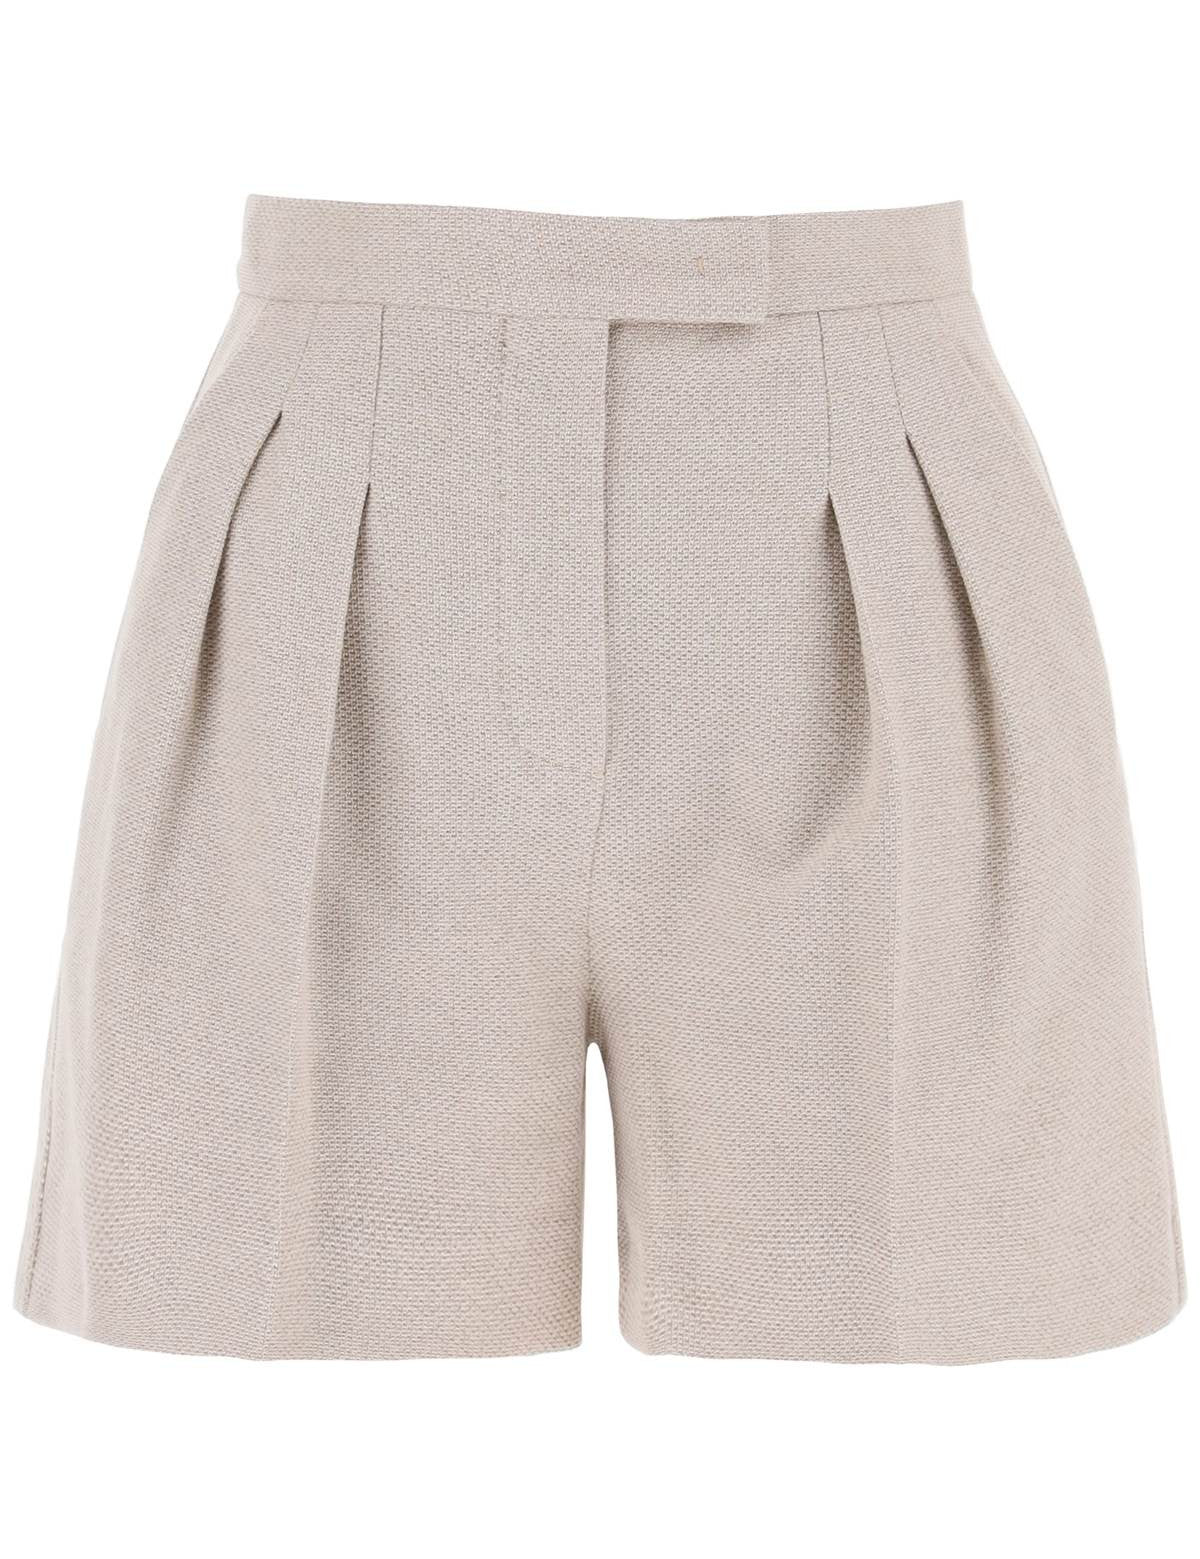 jessica-cotton-jersey-shorts-for-women.jpg